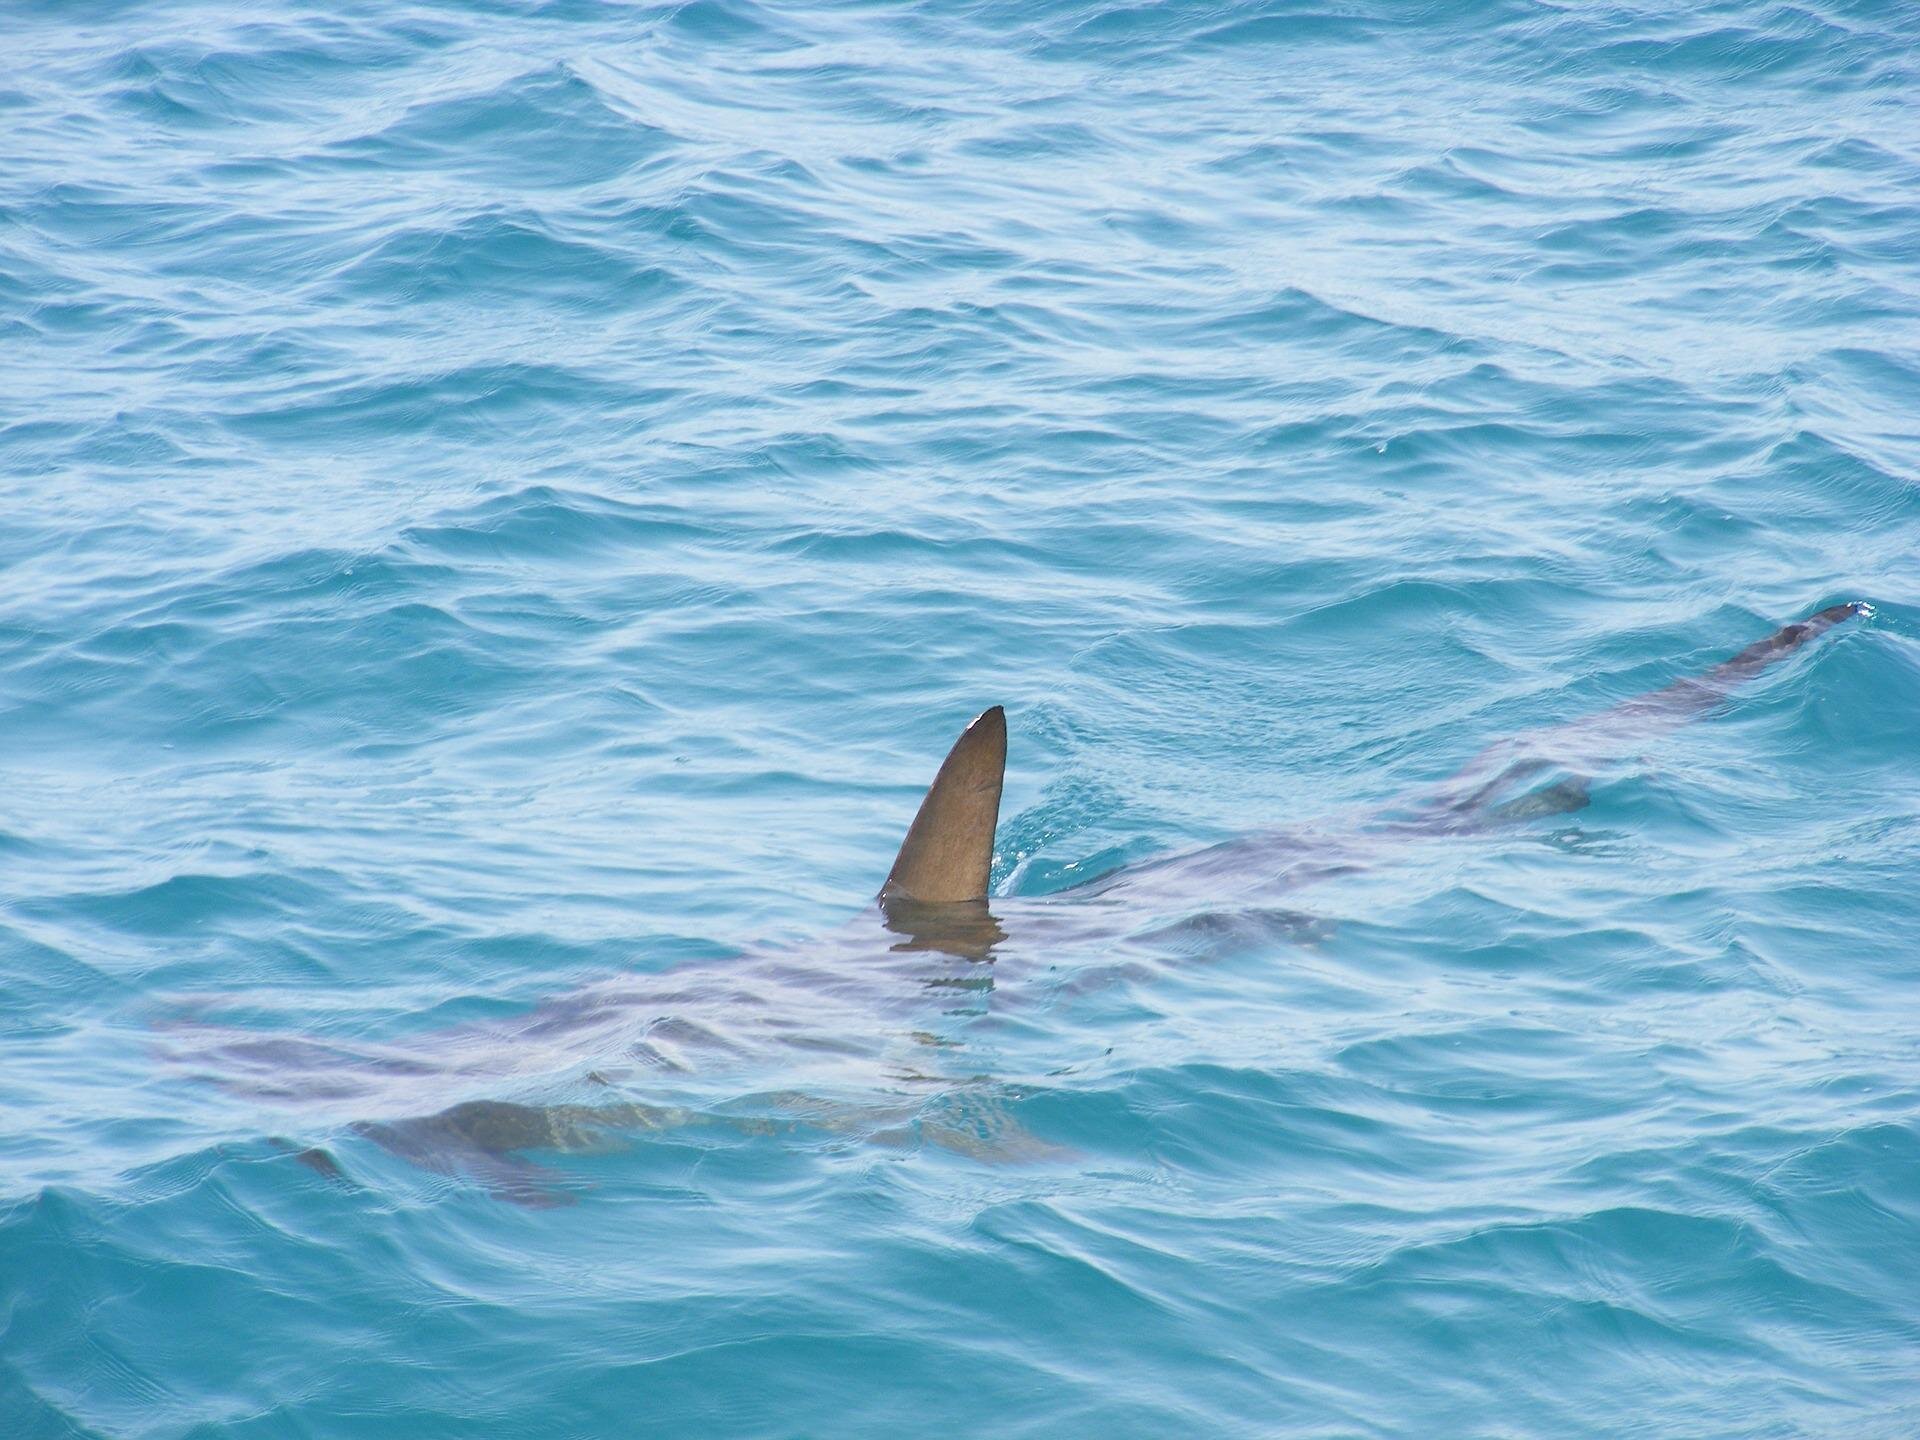 DNA tests confirm shark that bit California swimmer was juvenile white shark